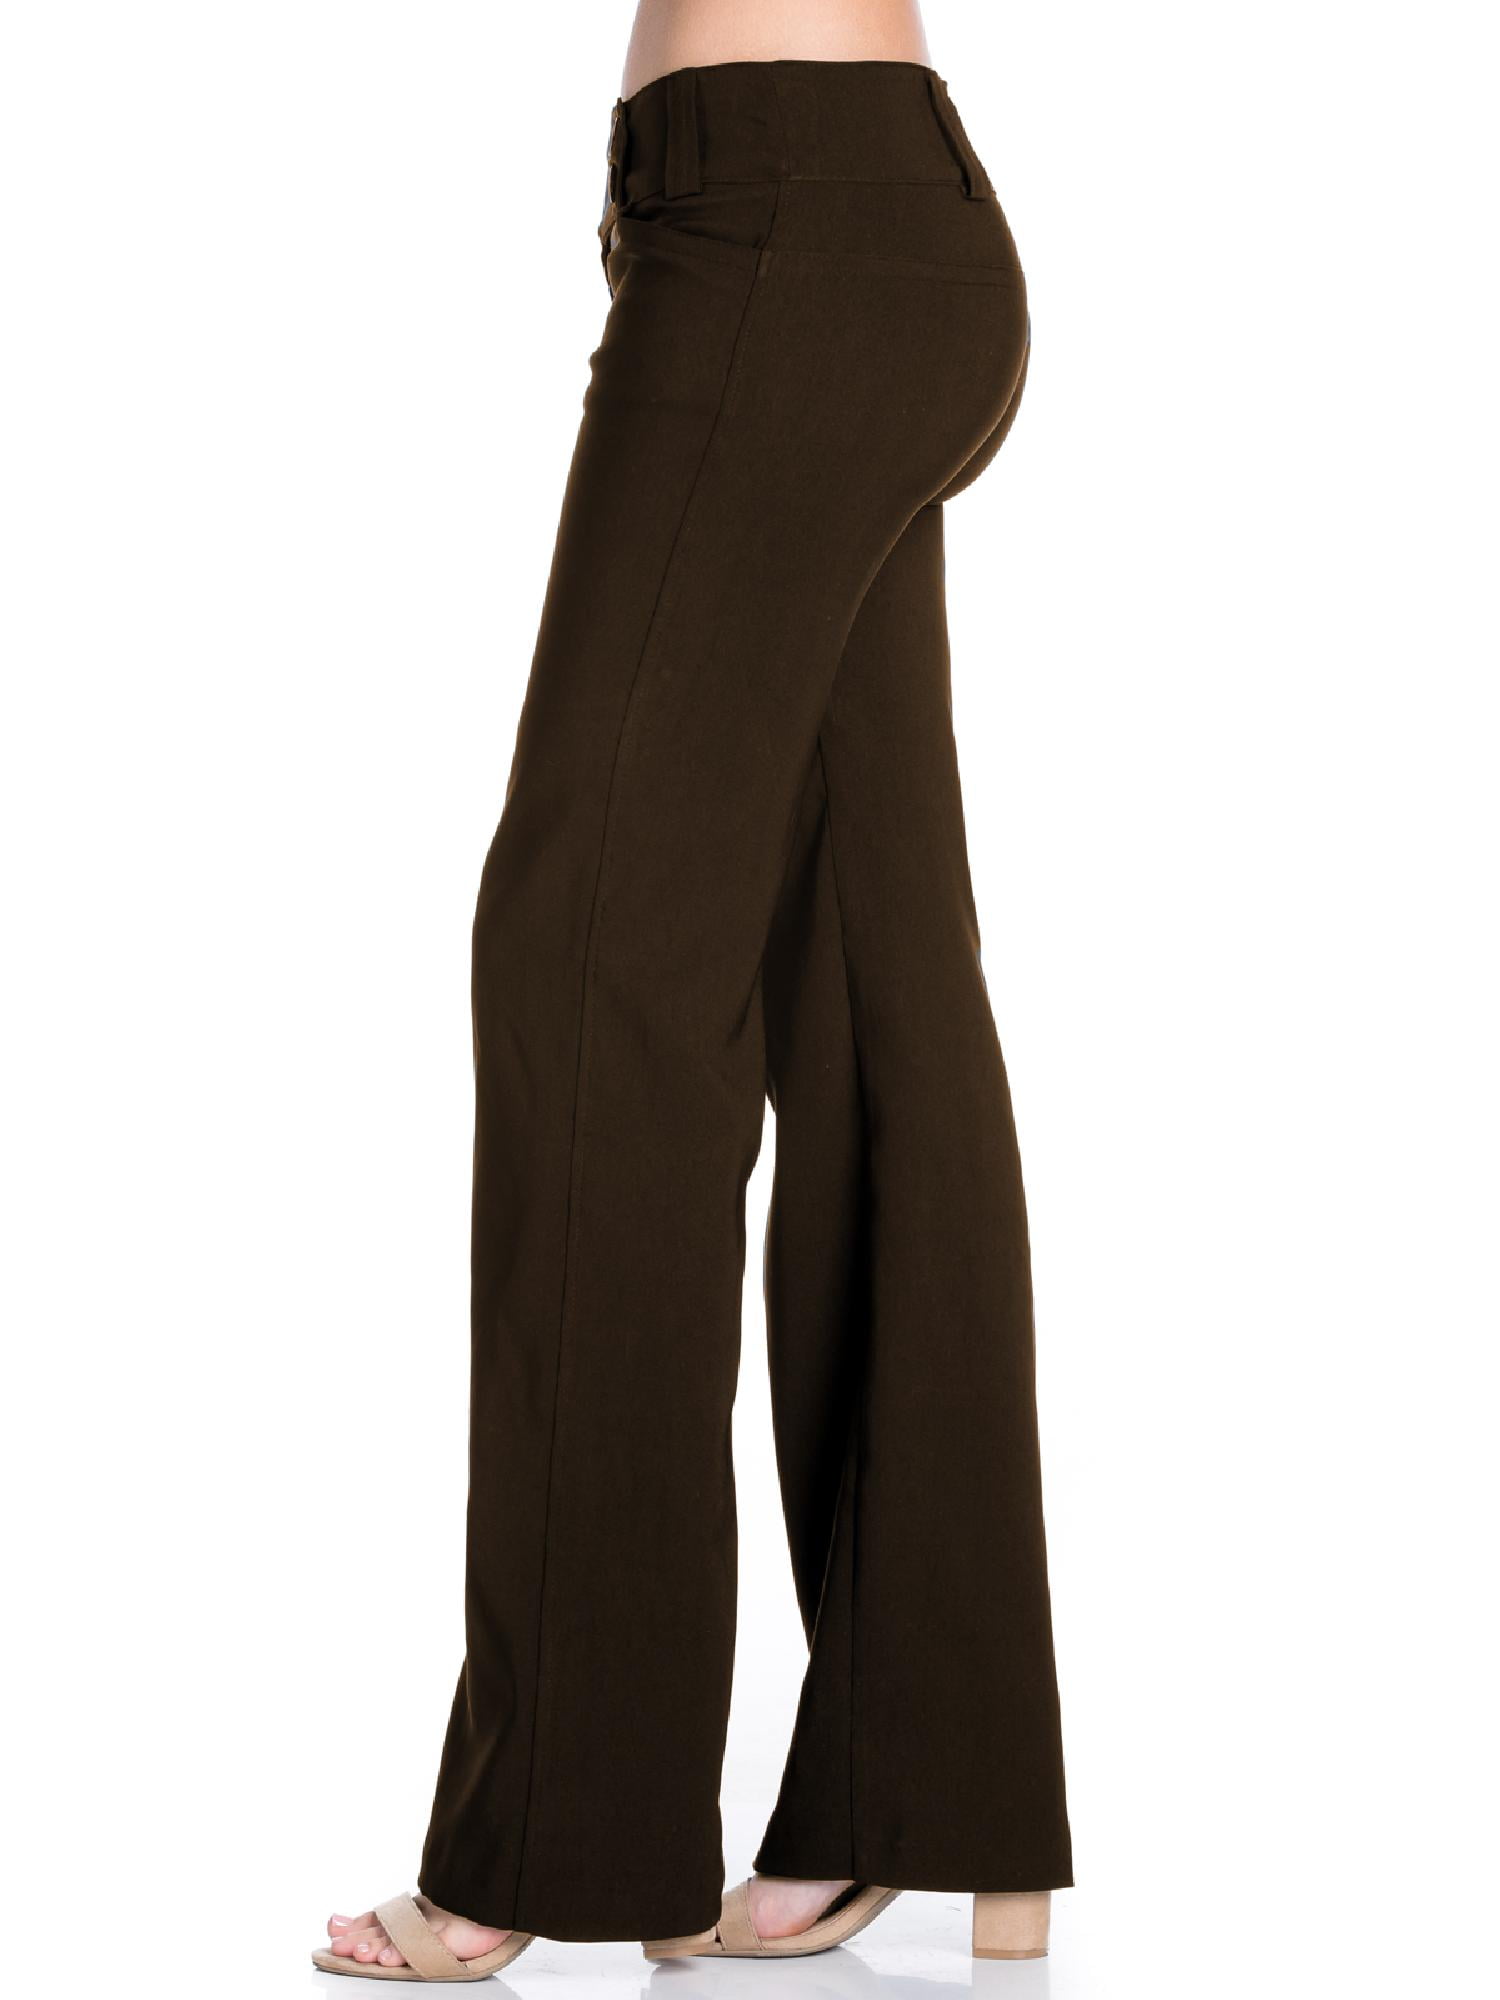 MixMatchy Women's High Waist Slim Boot-Cut Stretch Office Pants Trousers  Black L 